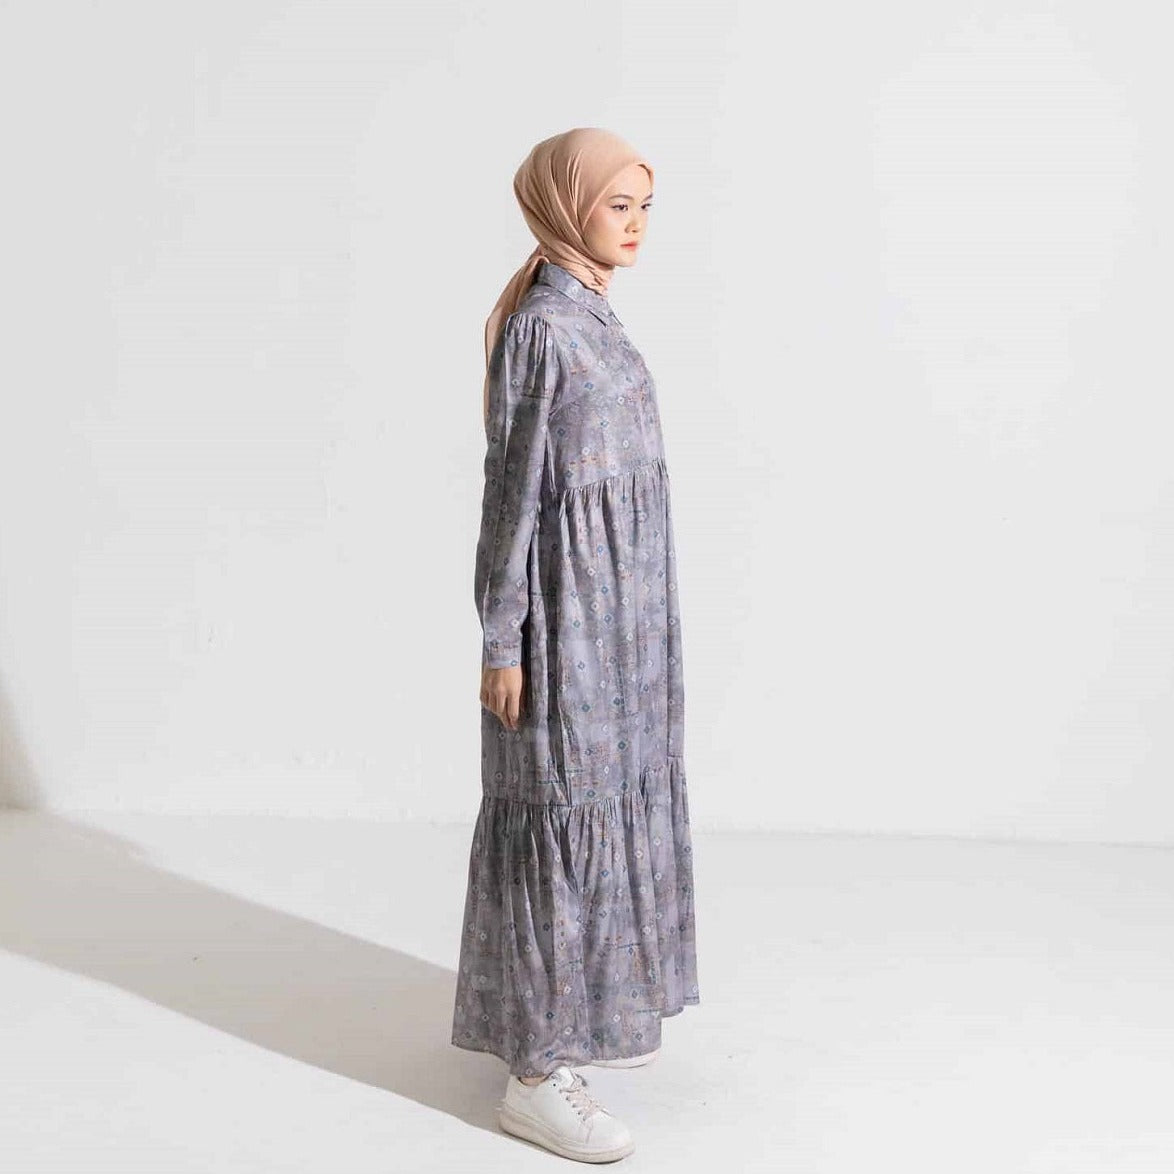 Dress Wanita Muslim Dauky Gamis L Dress Bohe Series - Silvergrey